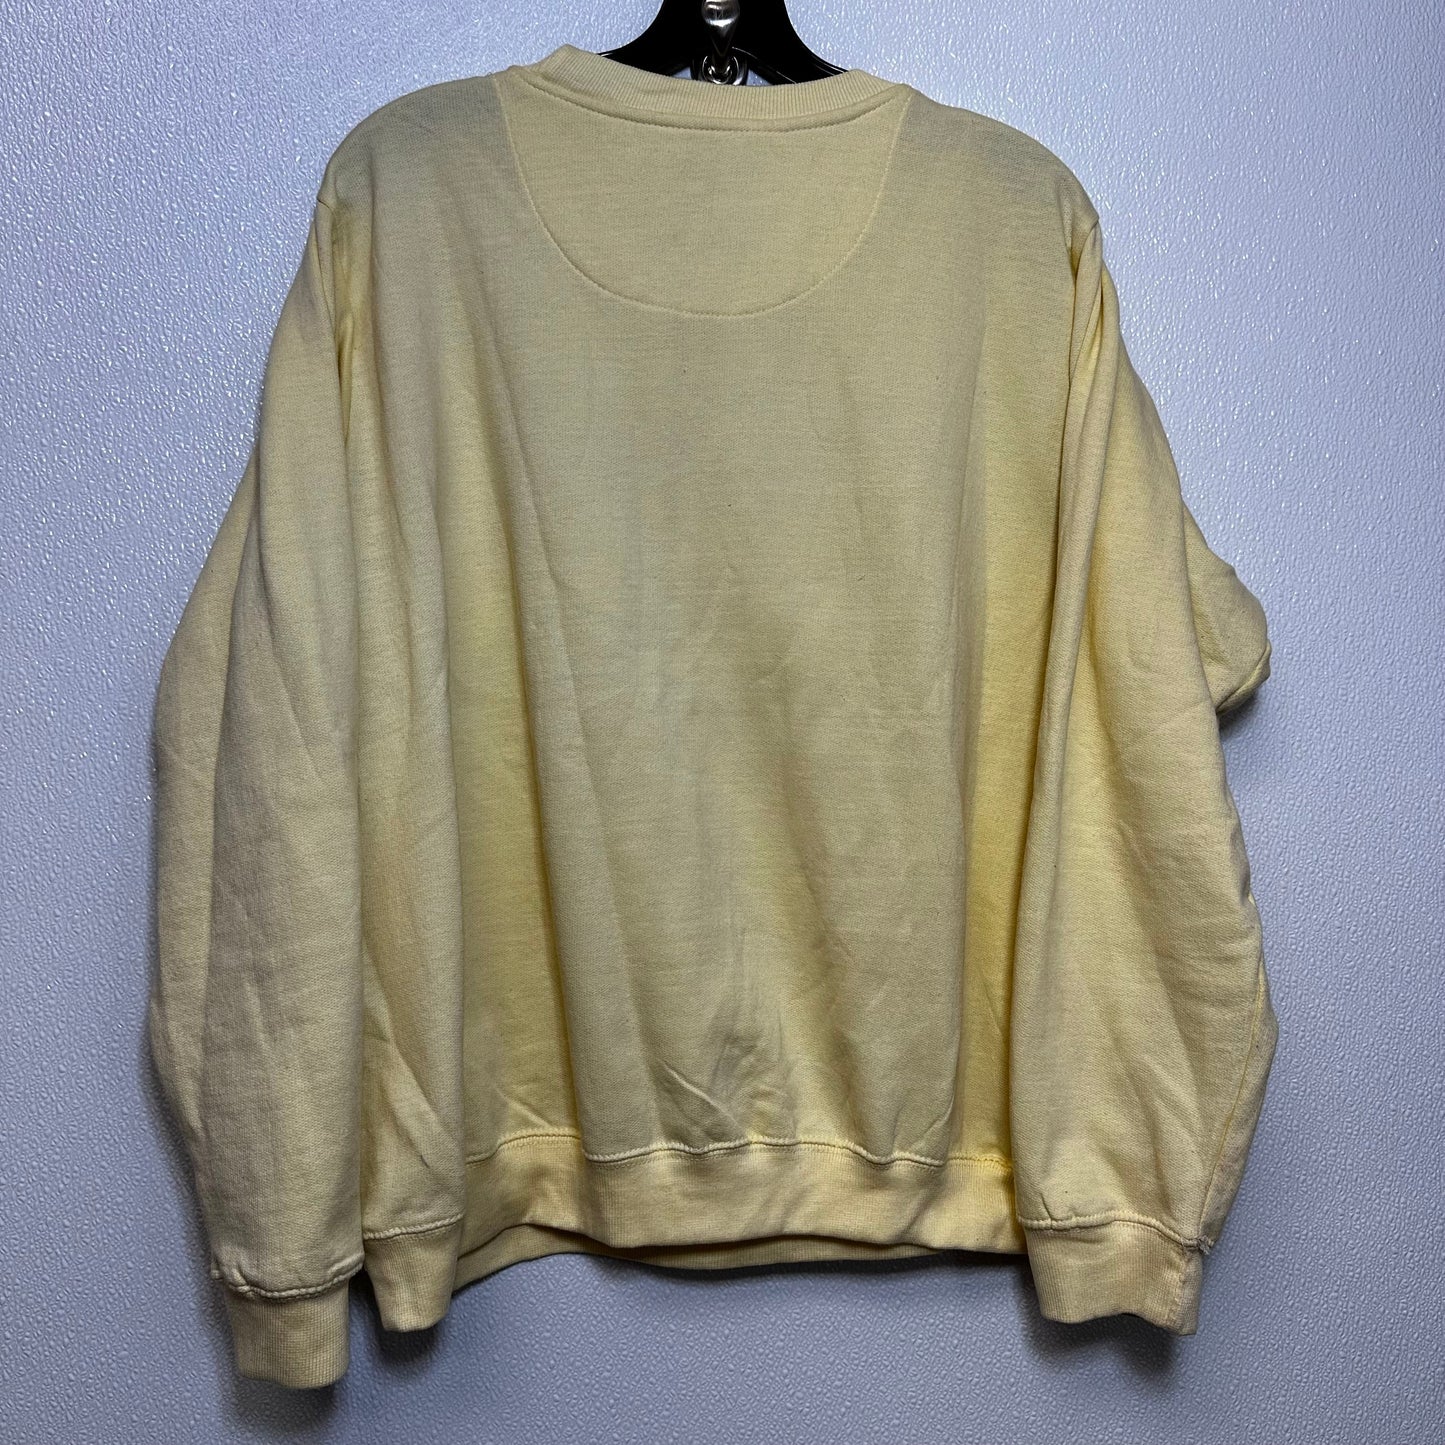 Yellow Sweatshirt Crewneck Clothes Mentor, Size Xxl